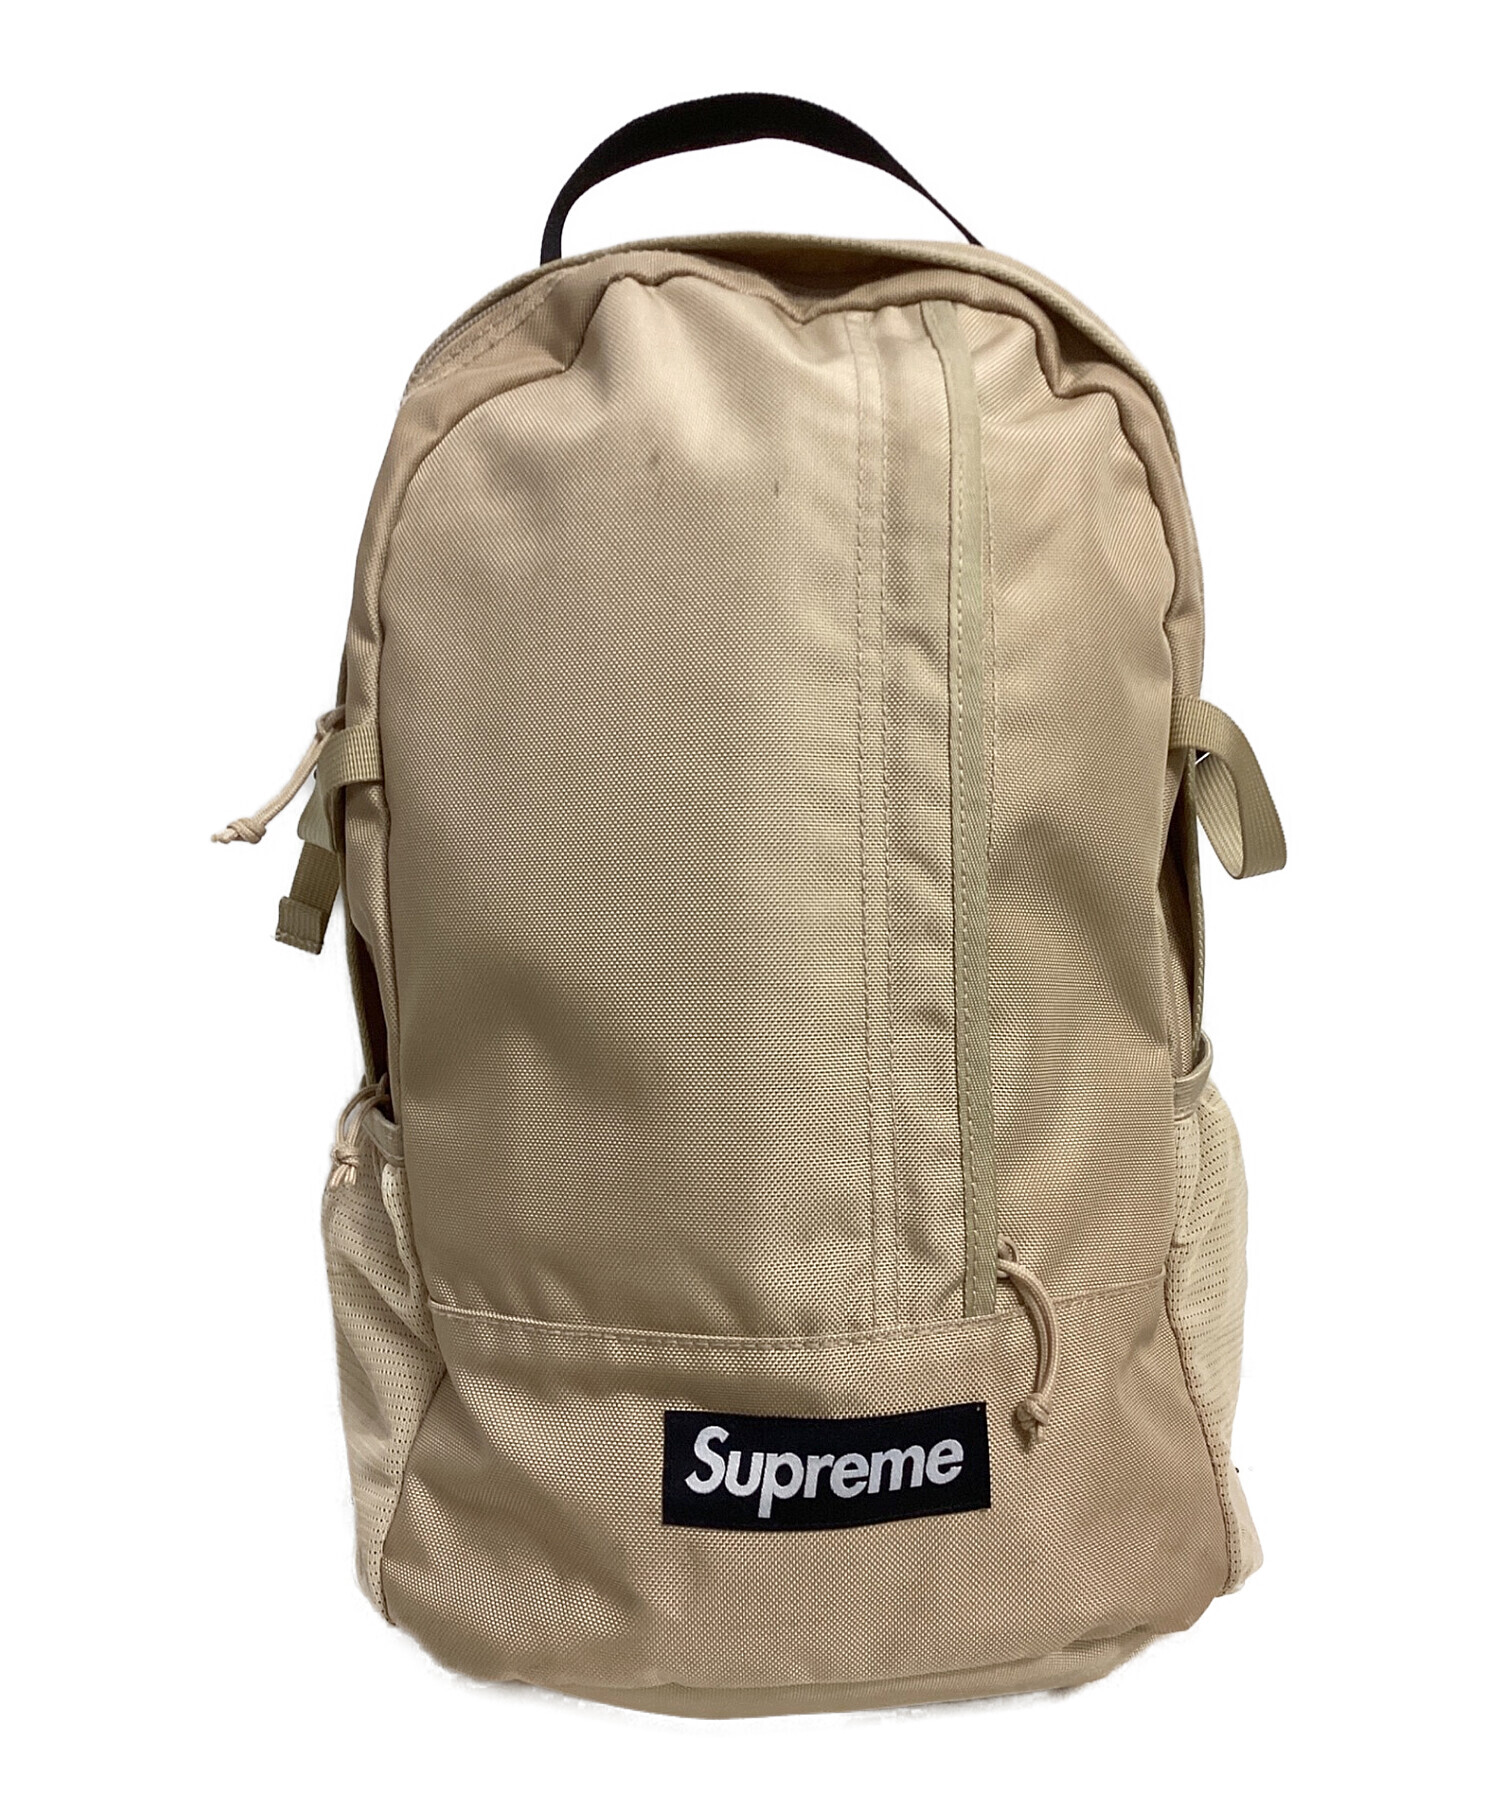 Supreme Backpack 18ss